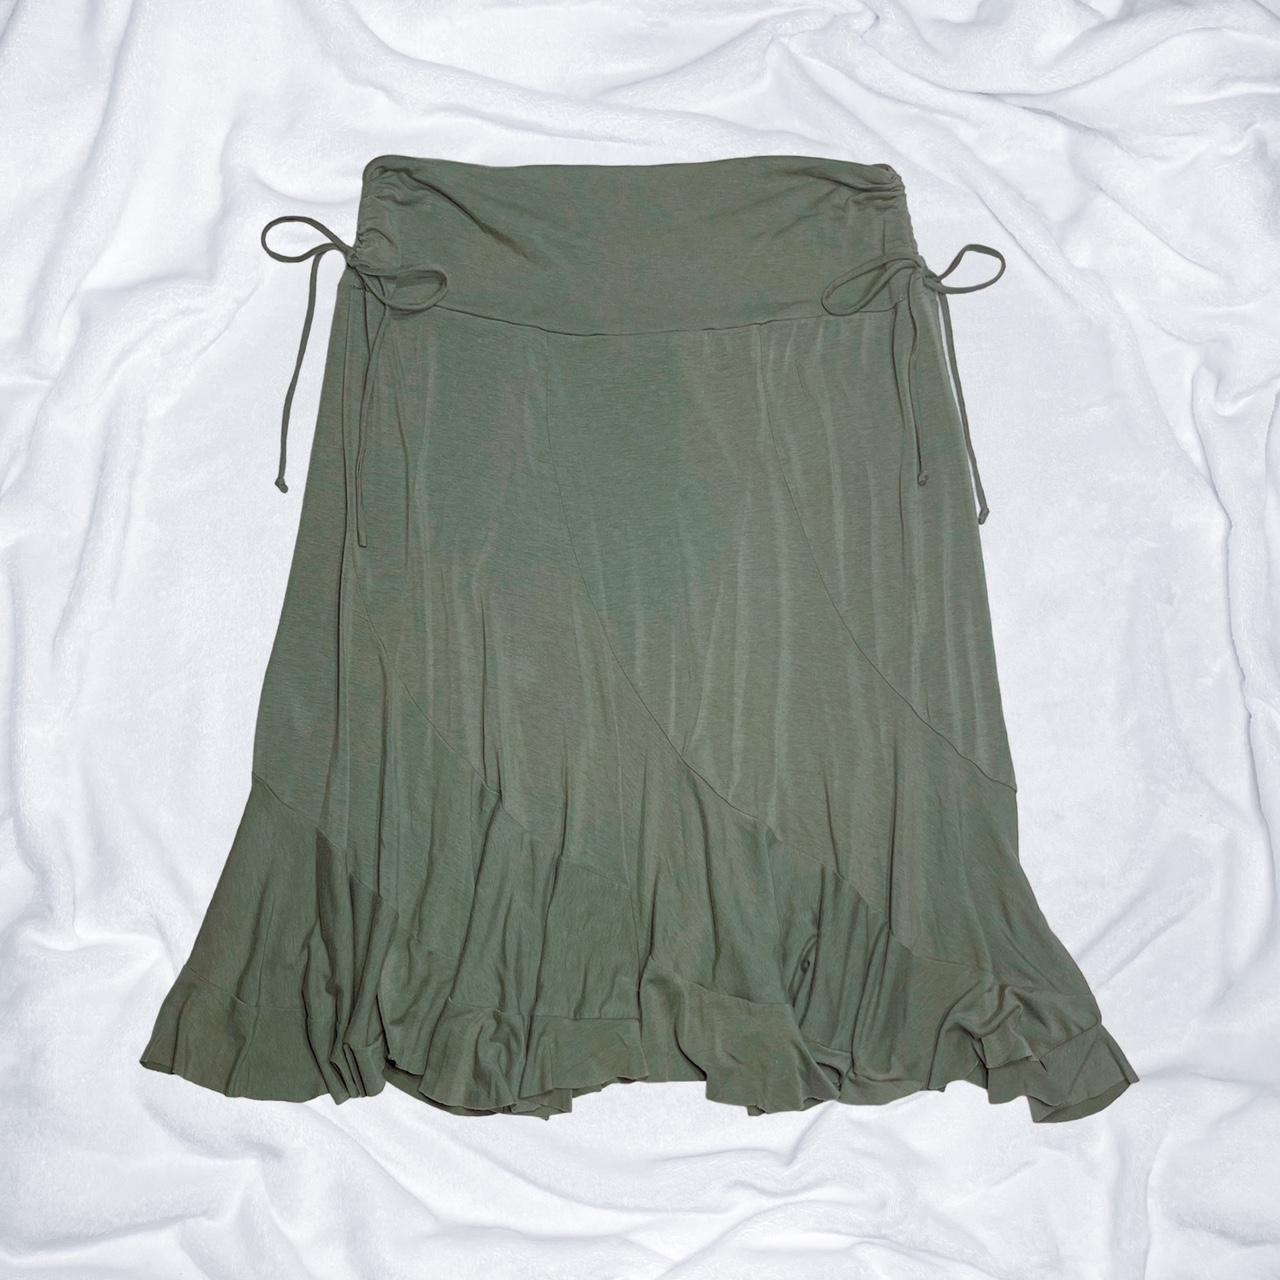 Copper Key Women's Green and Khaki Skirt | Depop